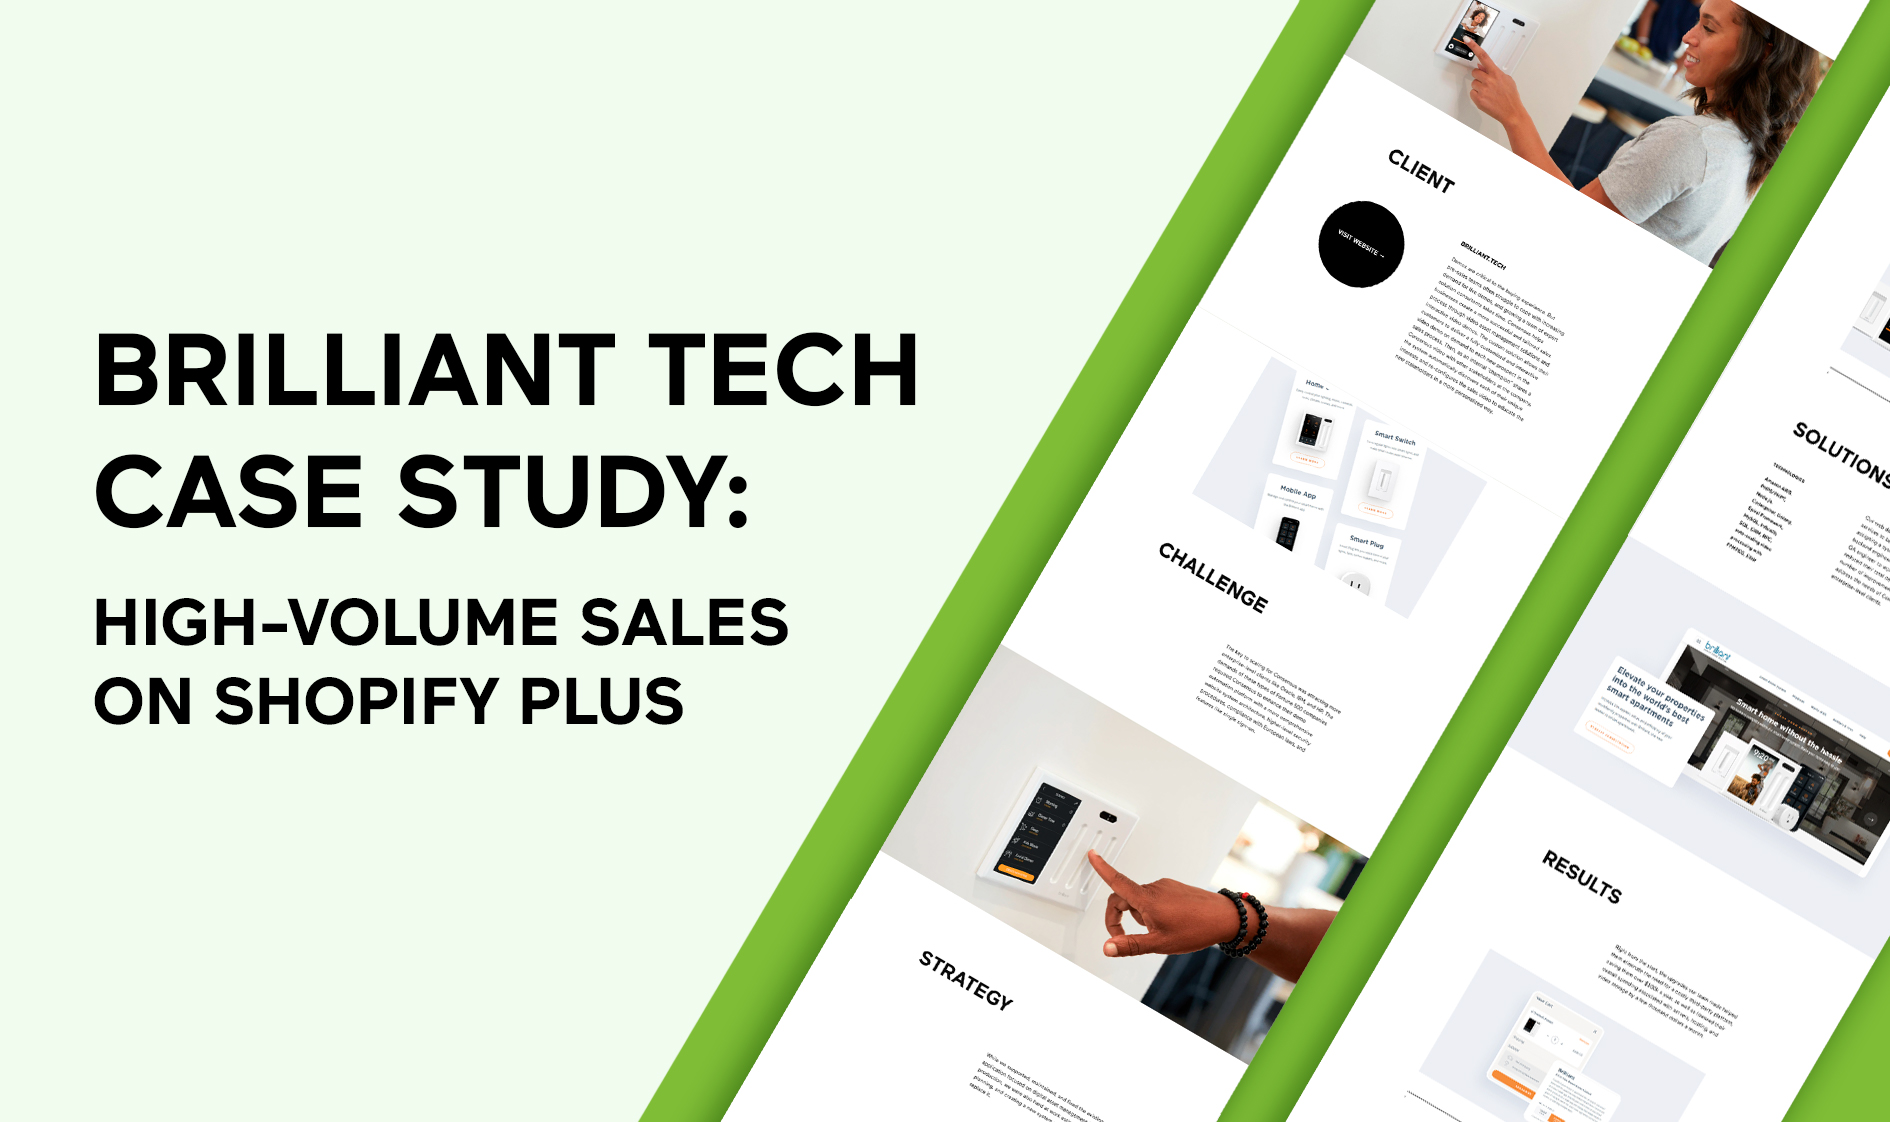 Sales on Shopify Plus